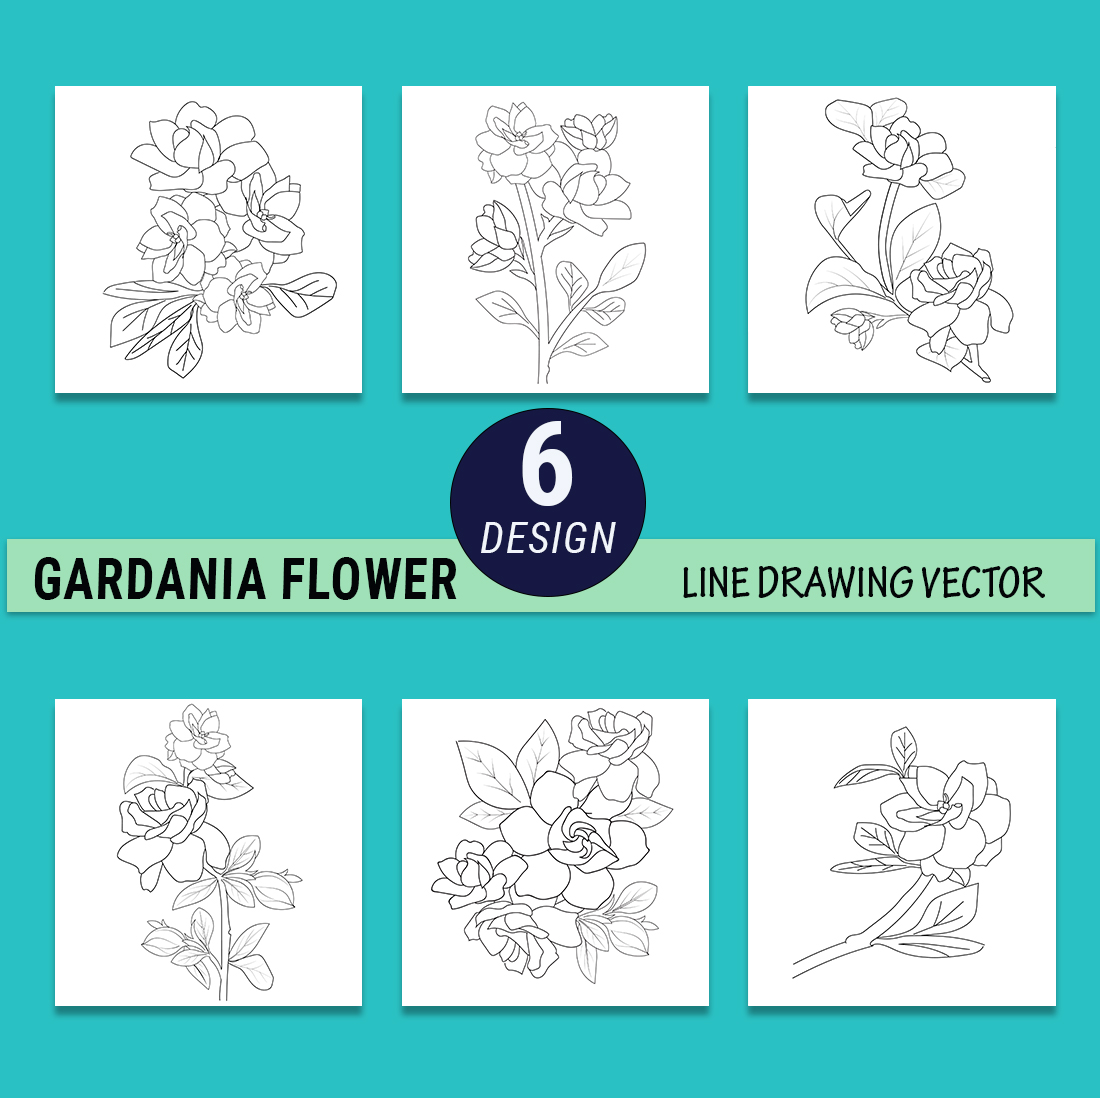 Gardenia flower drawing, gardenia magnolia coloring pages easy gardenia flower drawing, pencil gardenia flower drawing preview image.